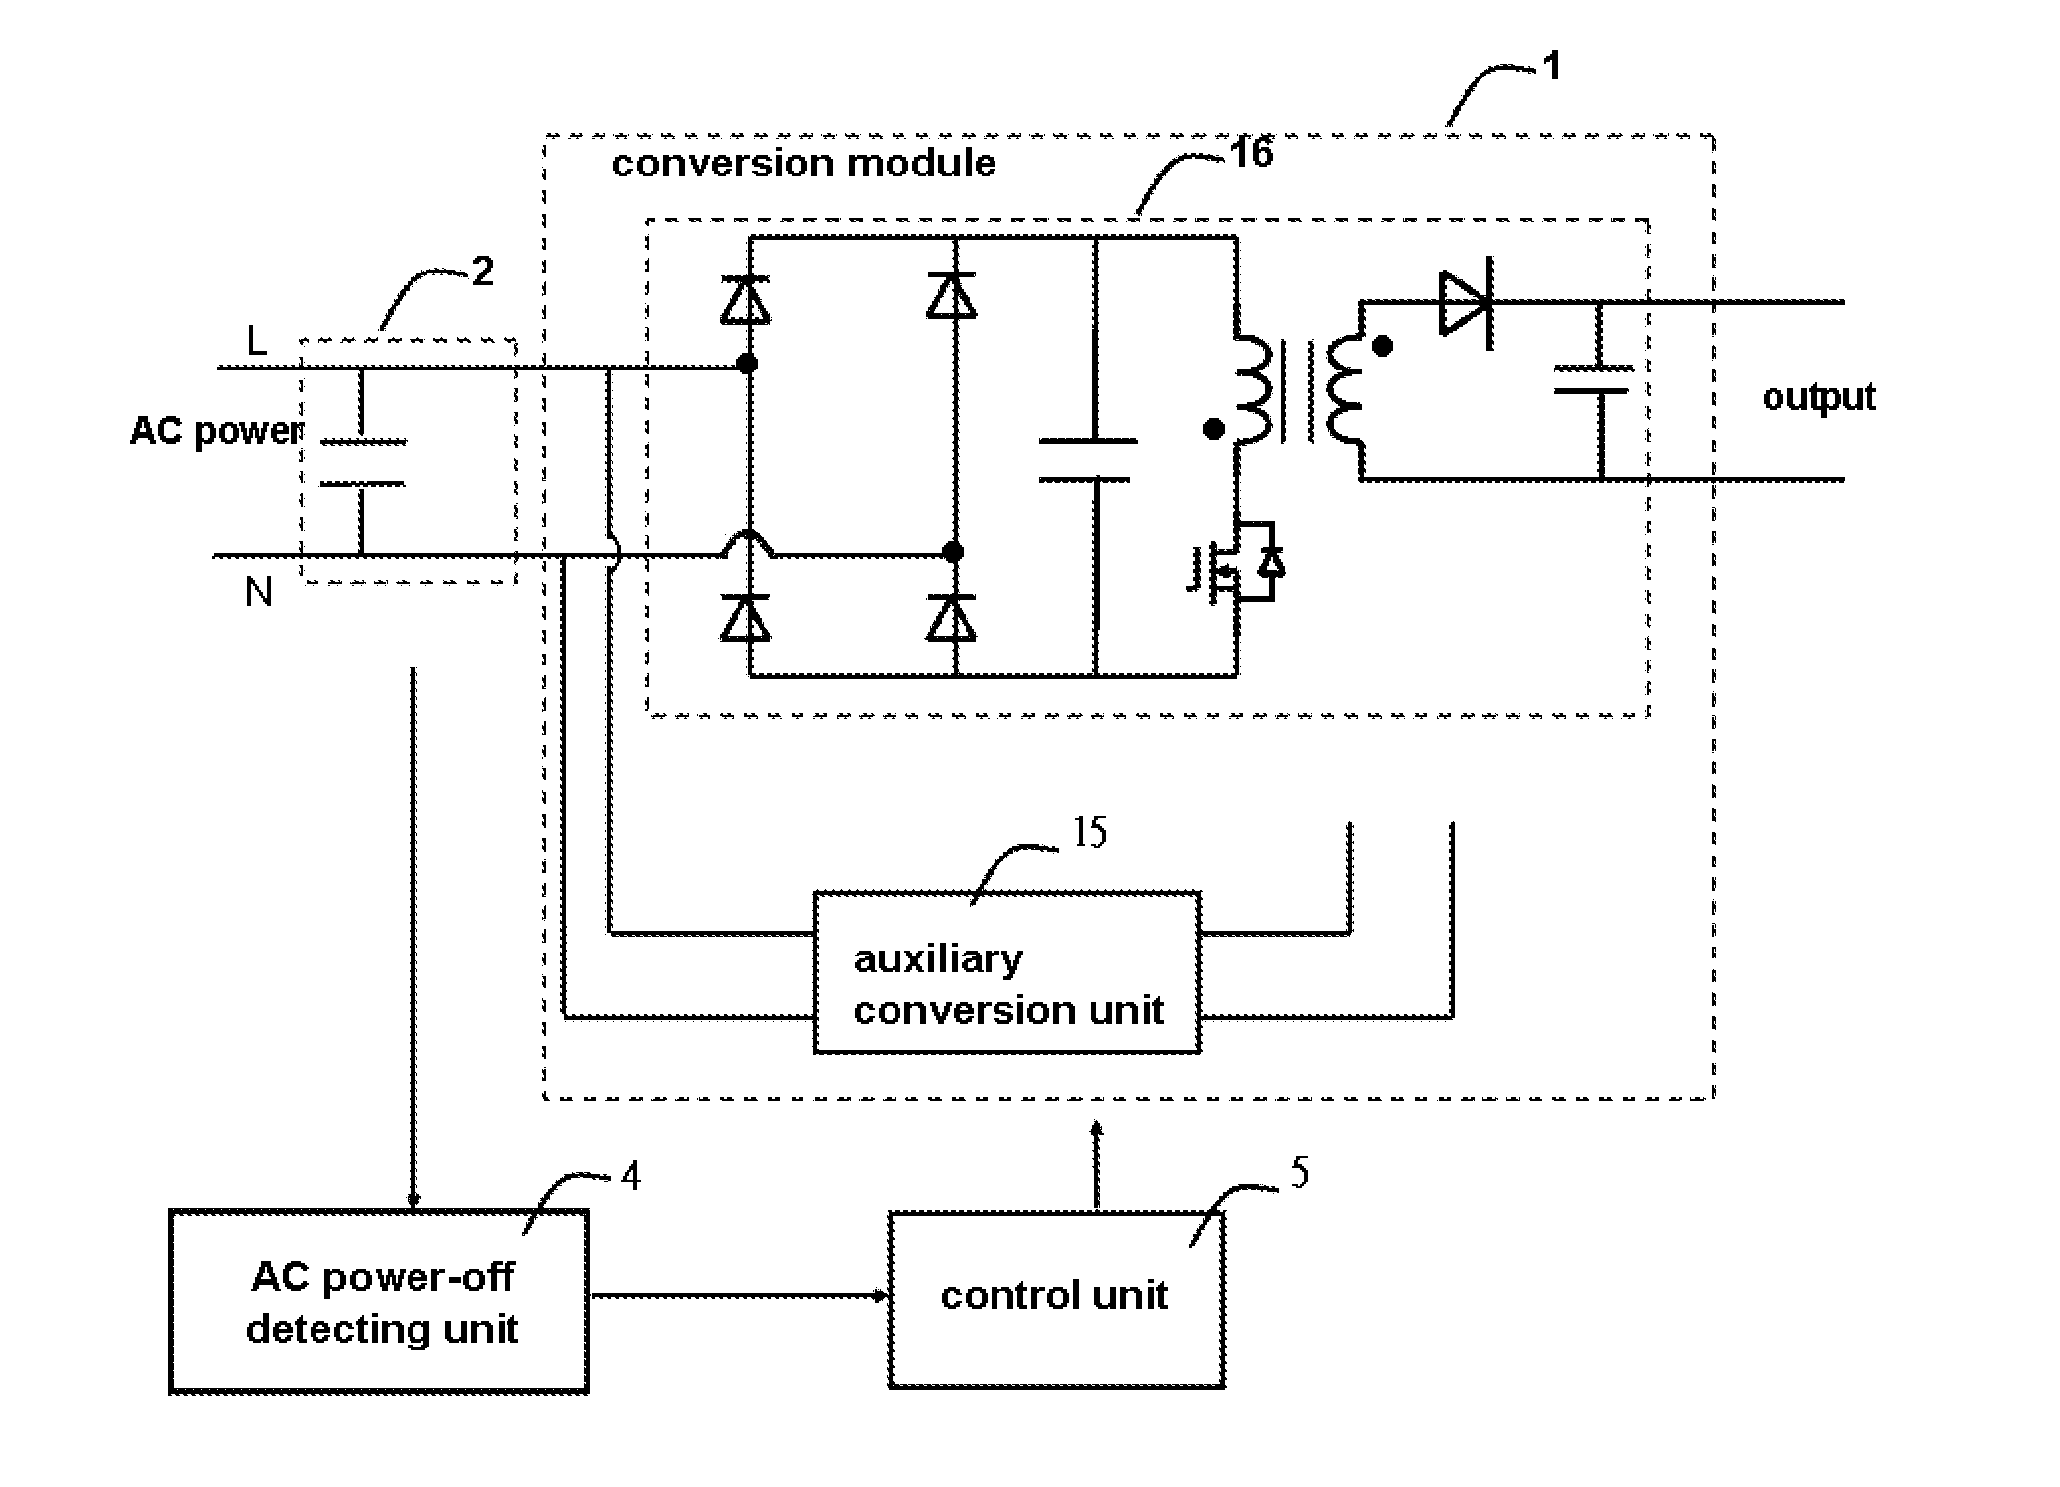 Capacitor discharging circuit and converter